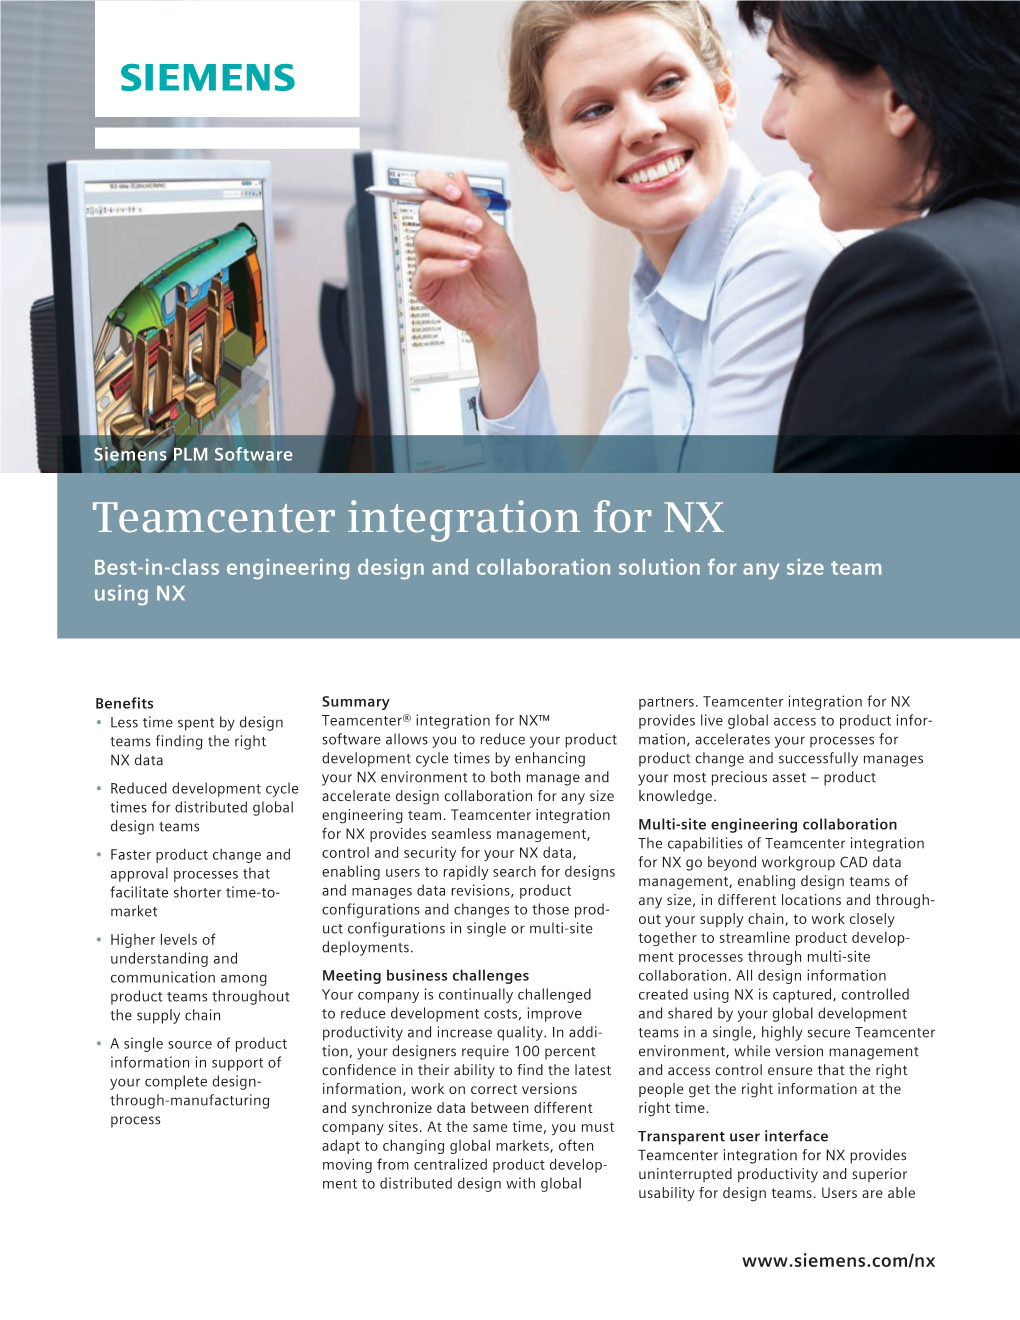 Teamcenter Integration for NX Fact Sheet